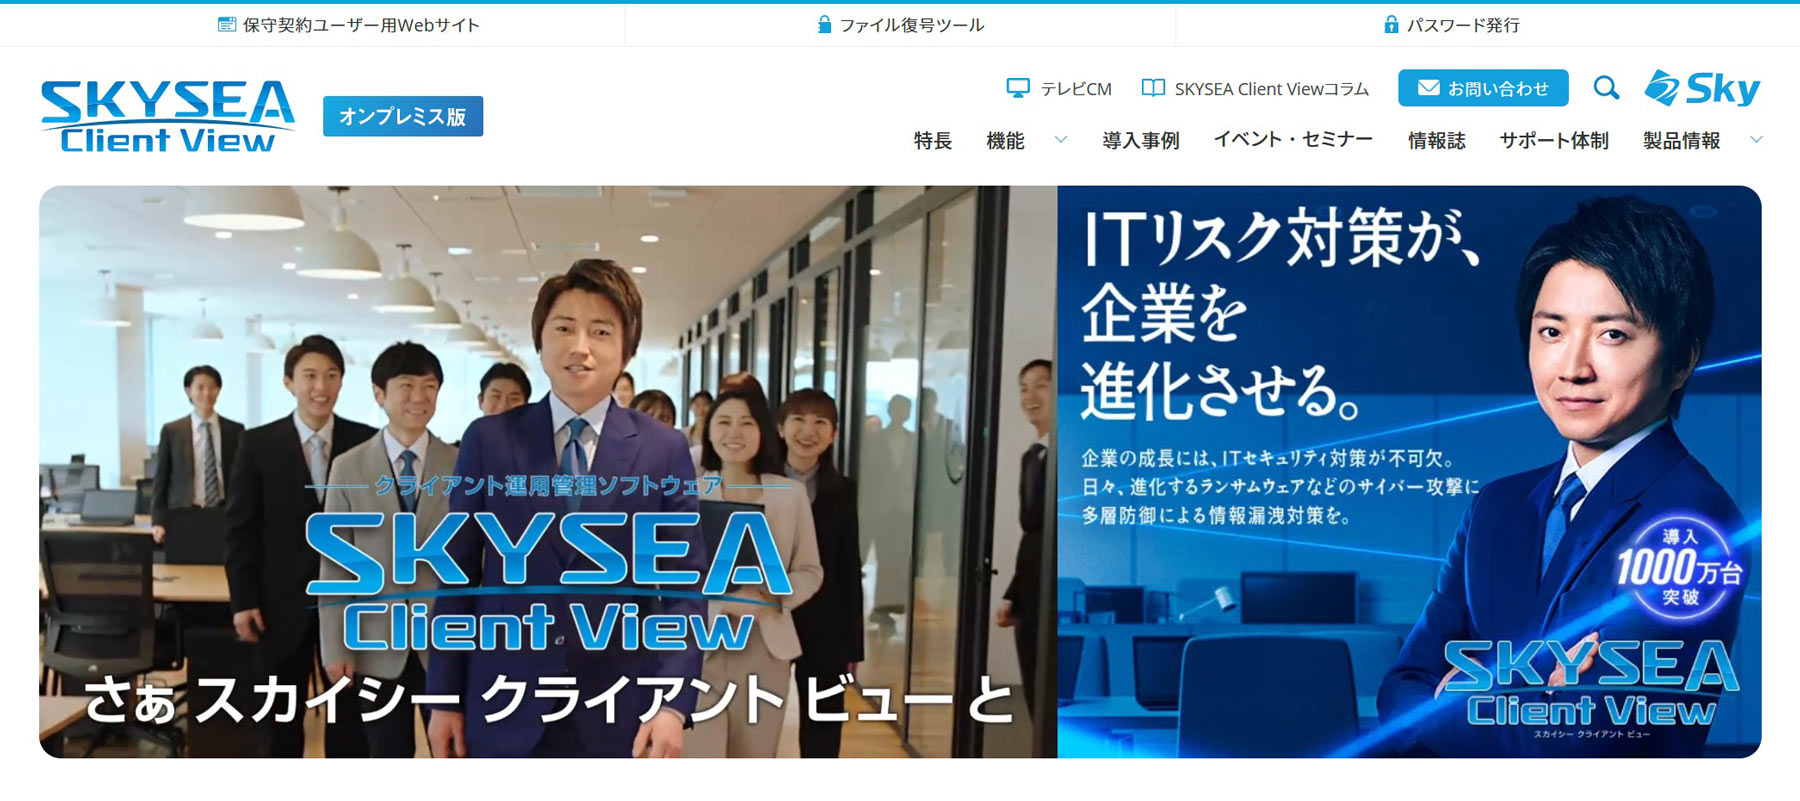 SKYSEA Client View公式Webサイト